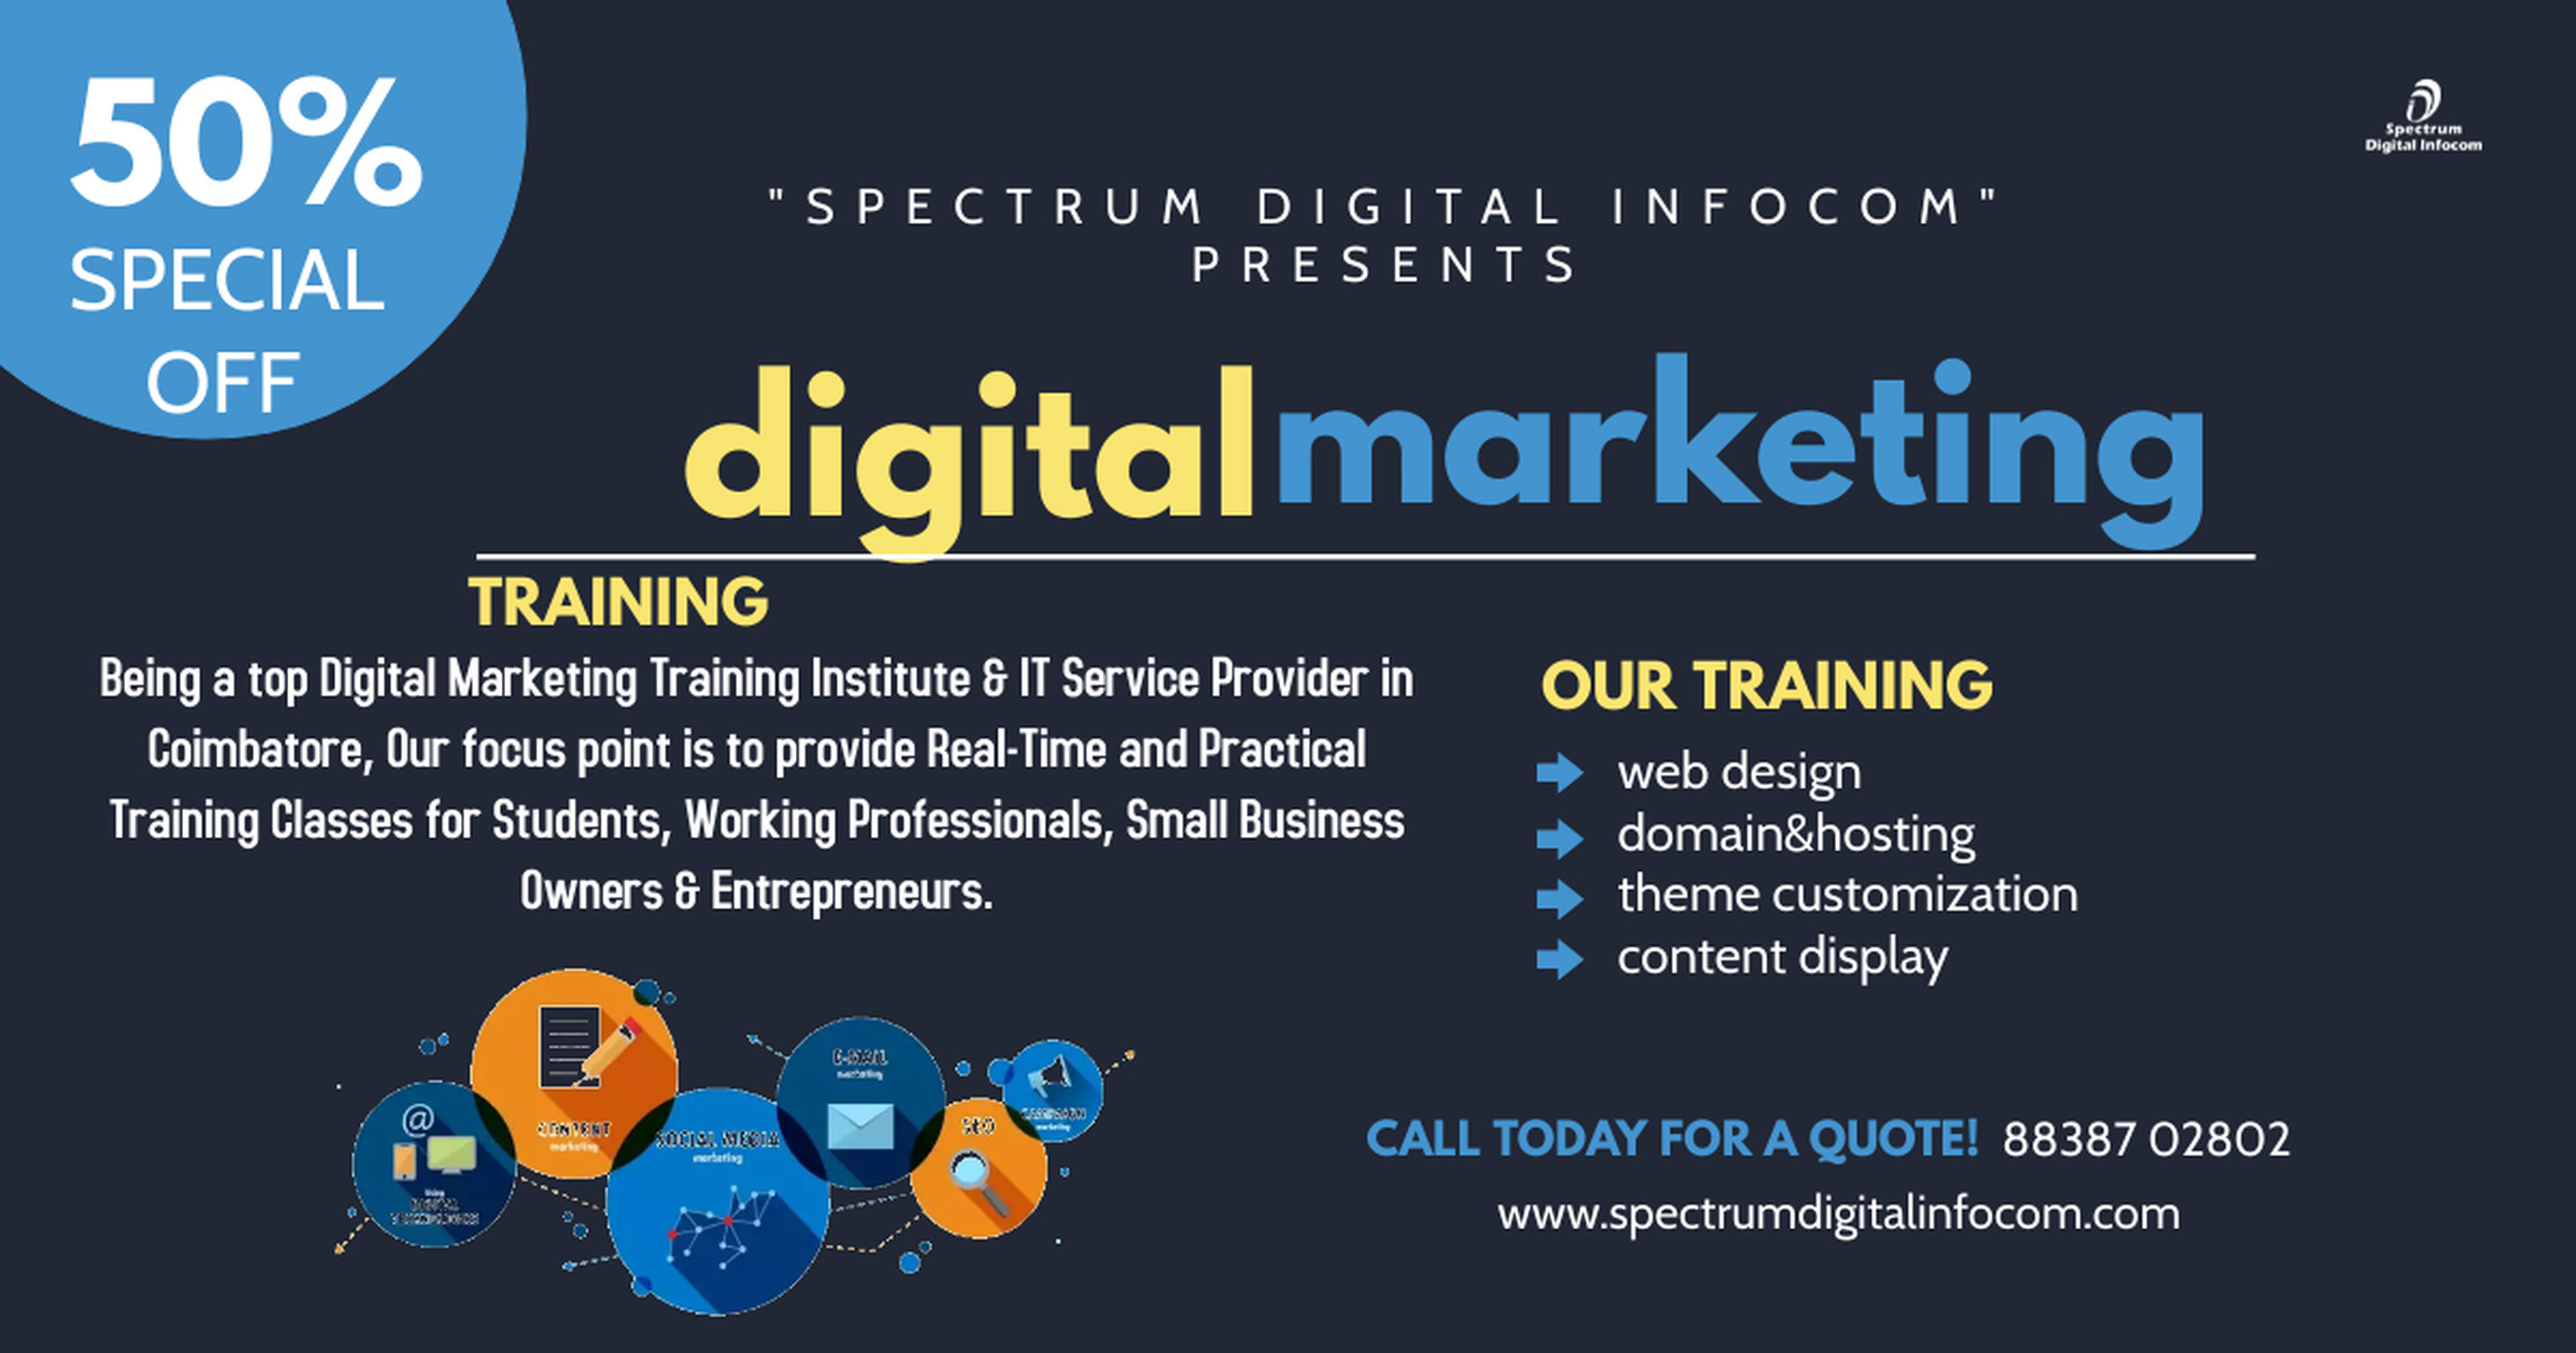 digital marketing training in Coimbatore@0909, Online Event